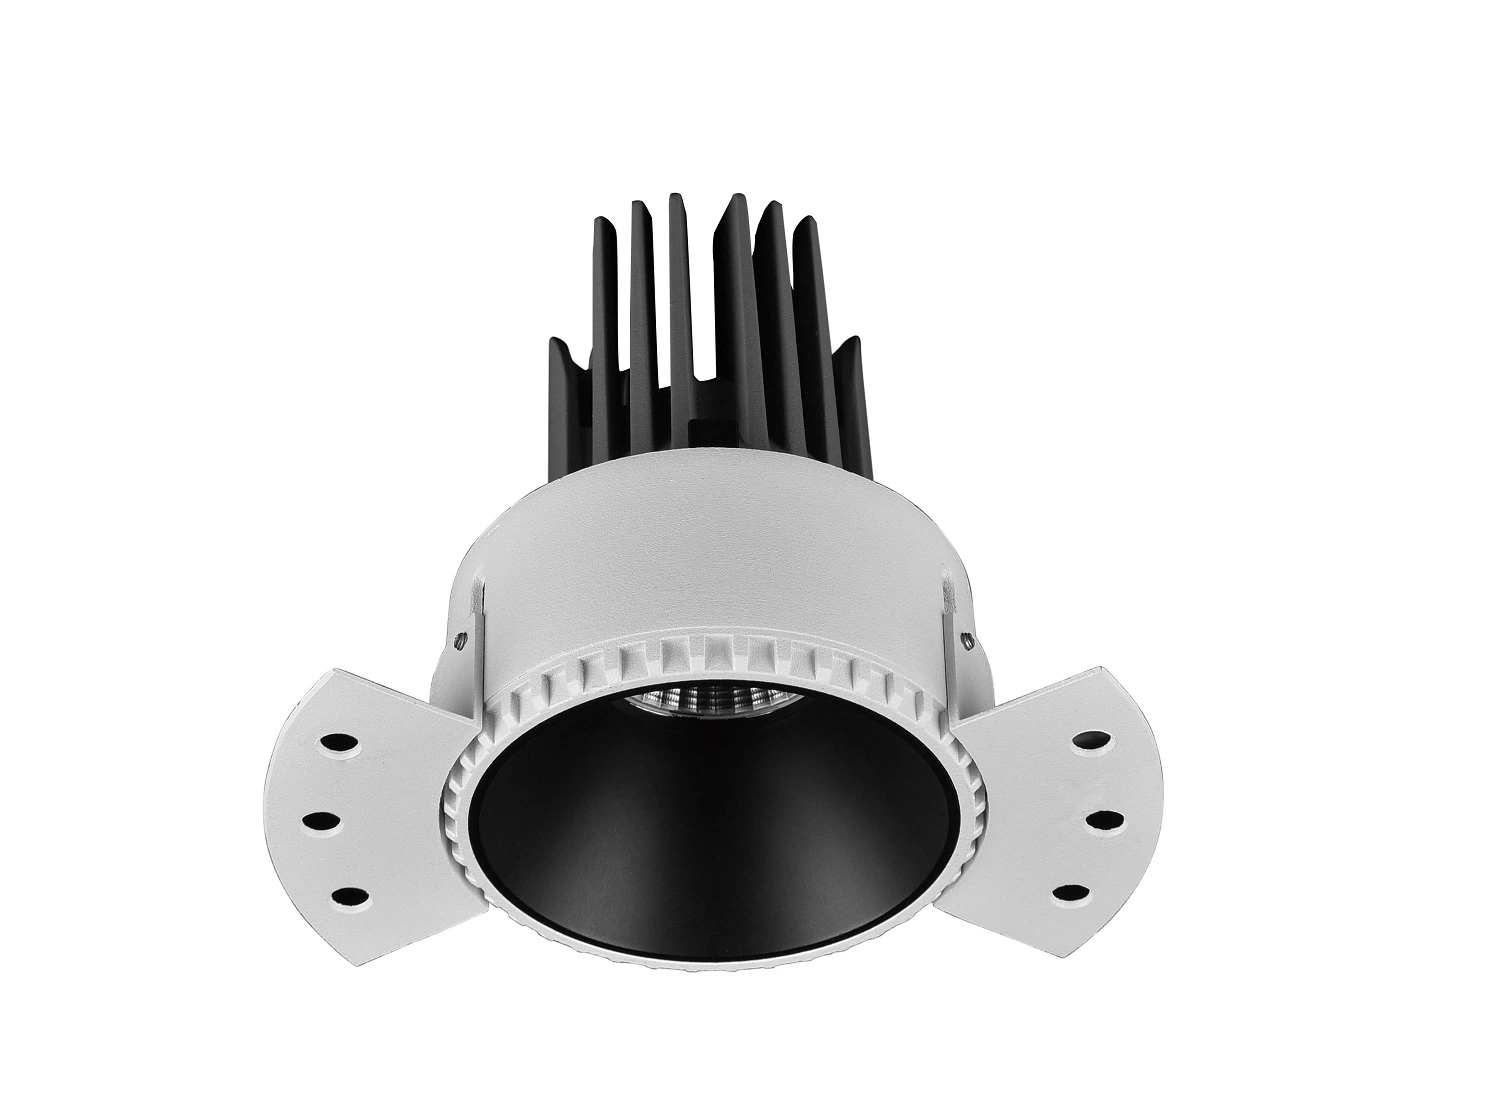 LED COB MR16 GU10 Module Bulb Lighting Source Recessed Ceiling Spotlight